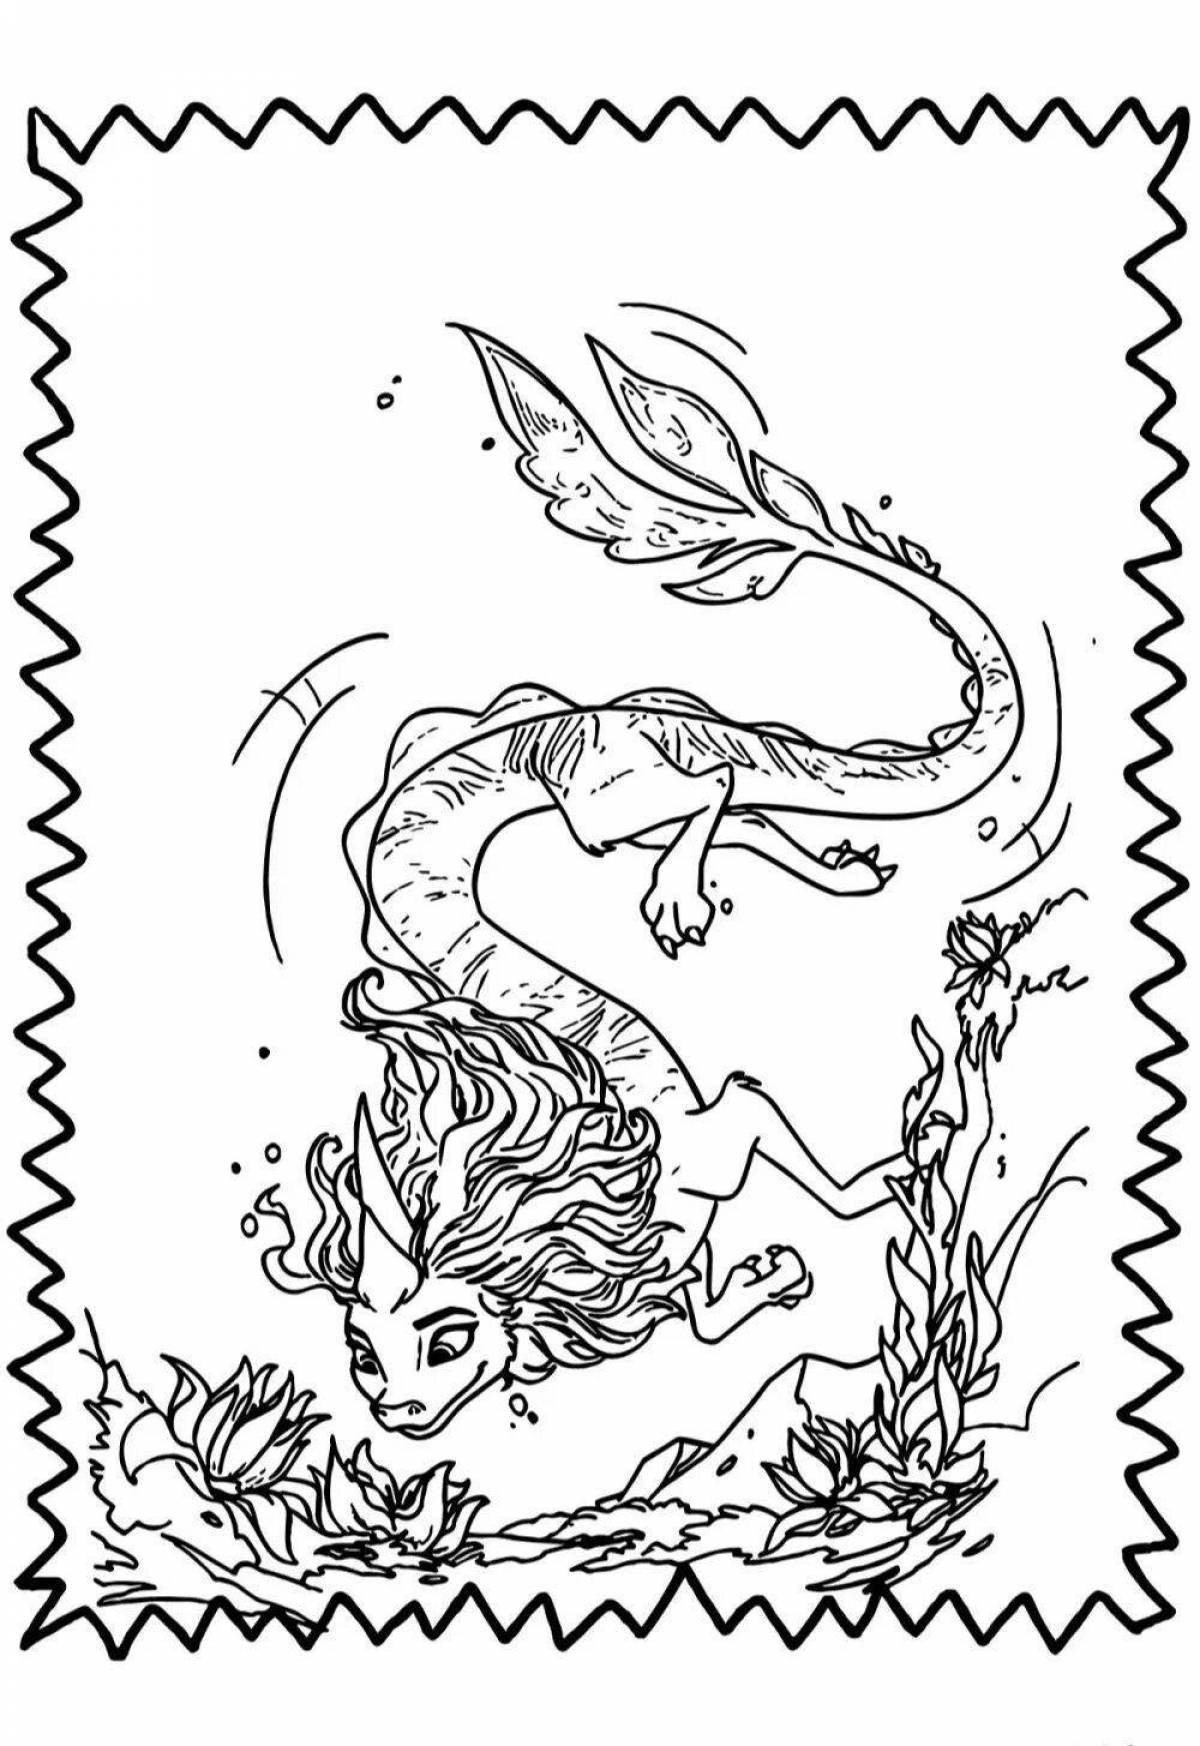 Shishu shining dragon coloring page